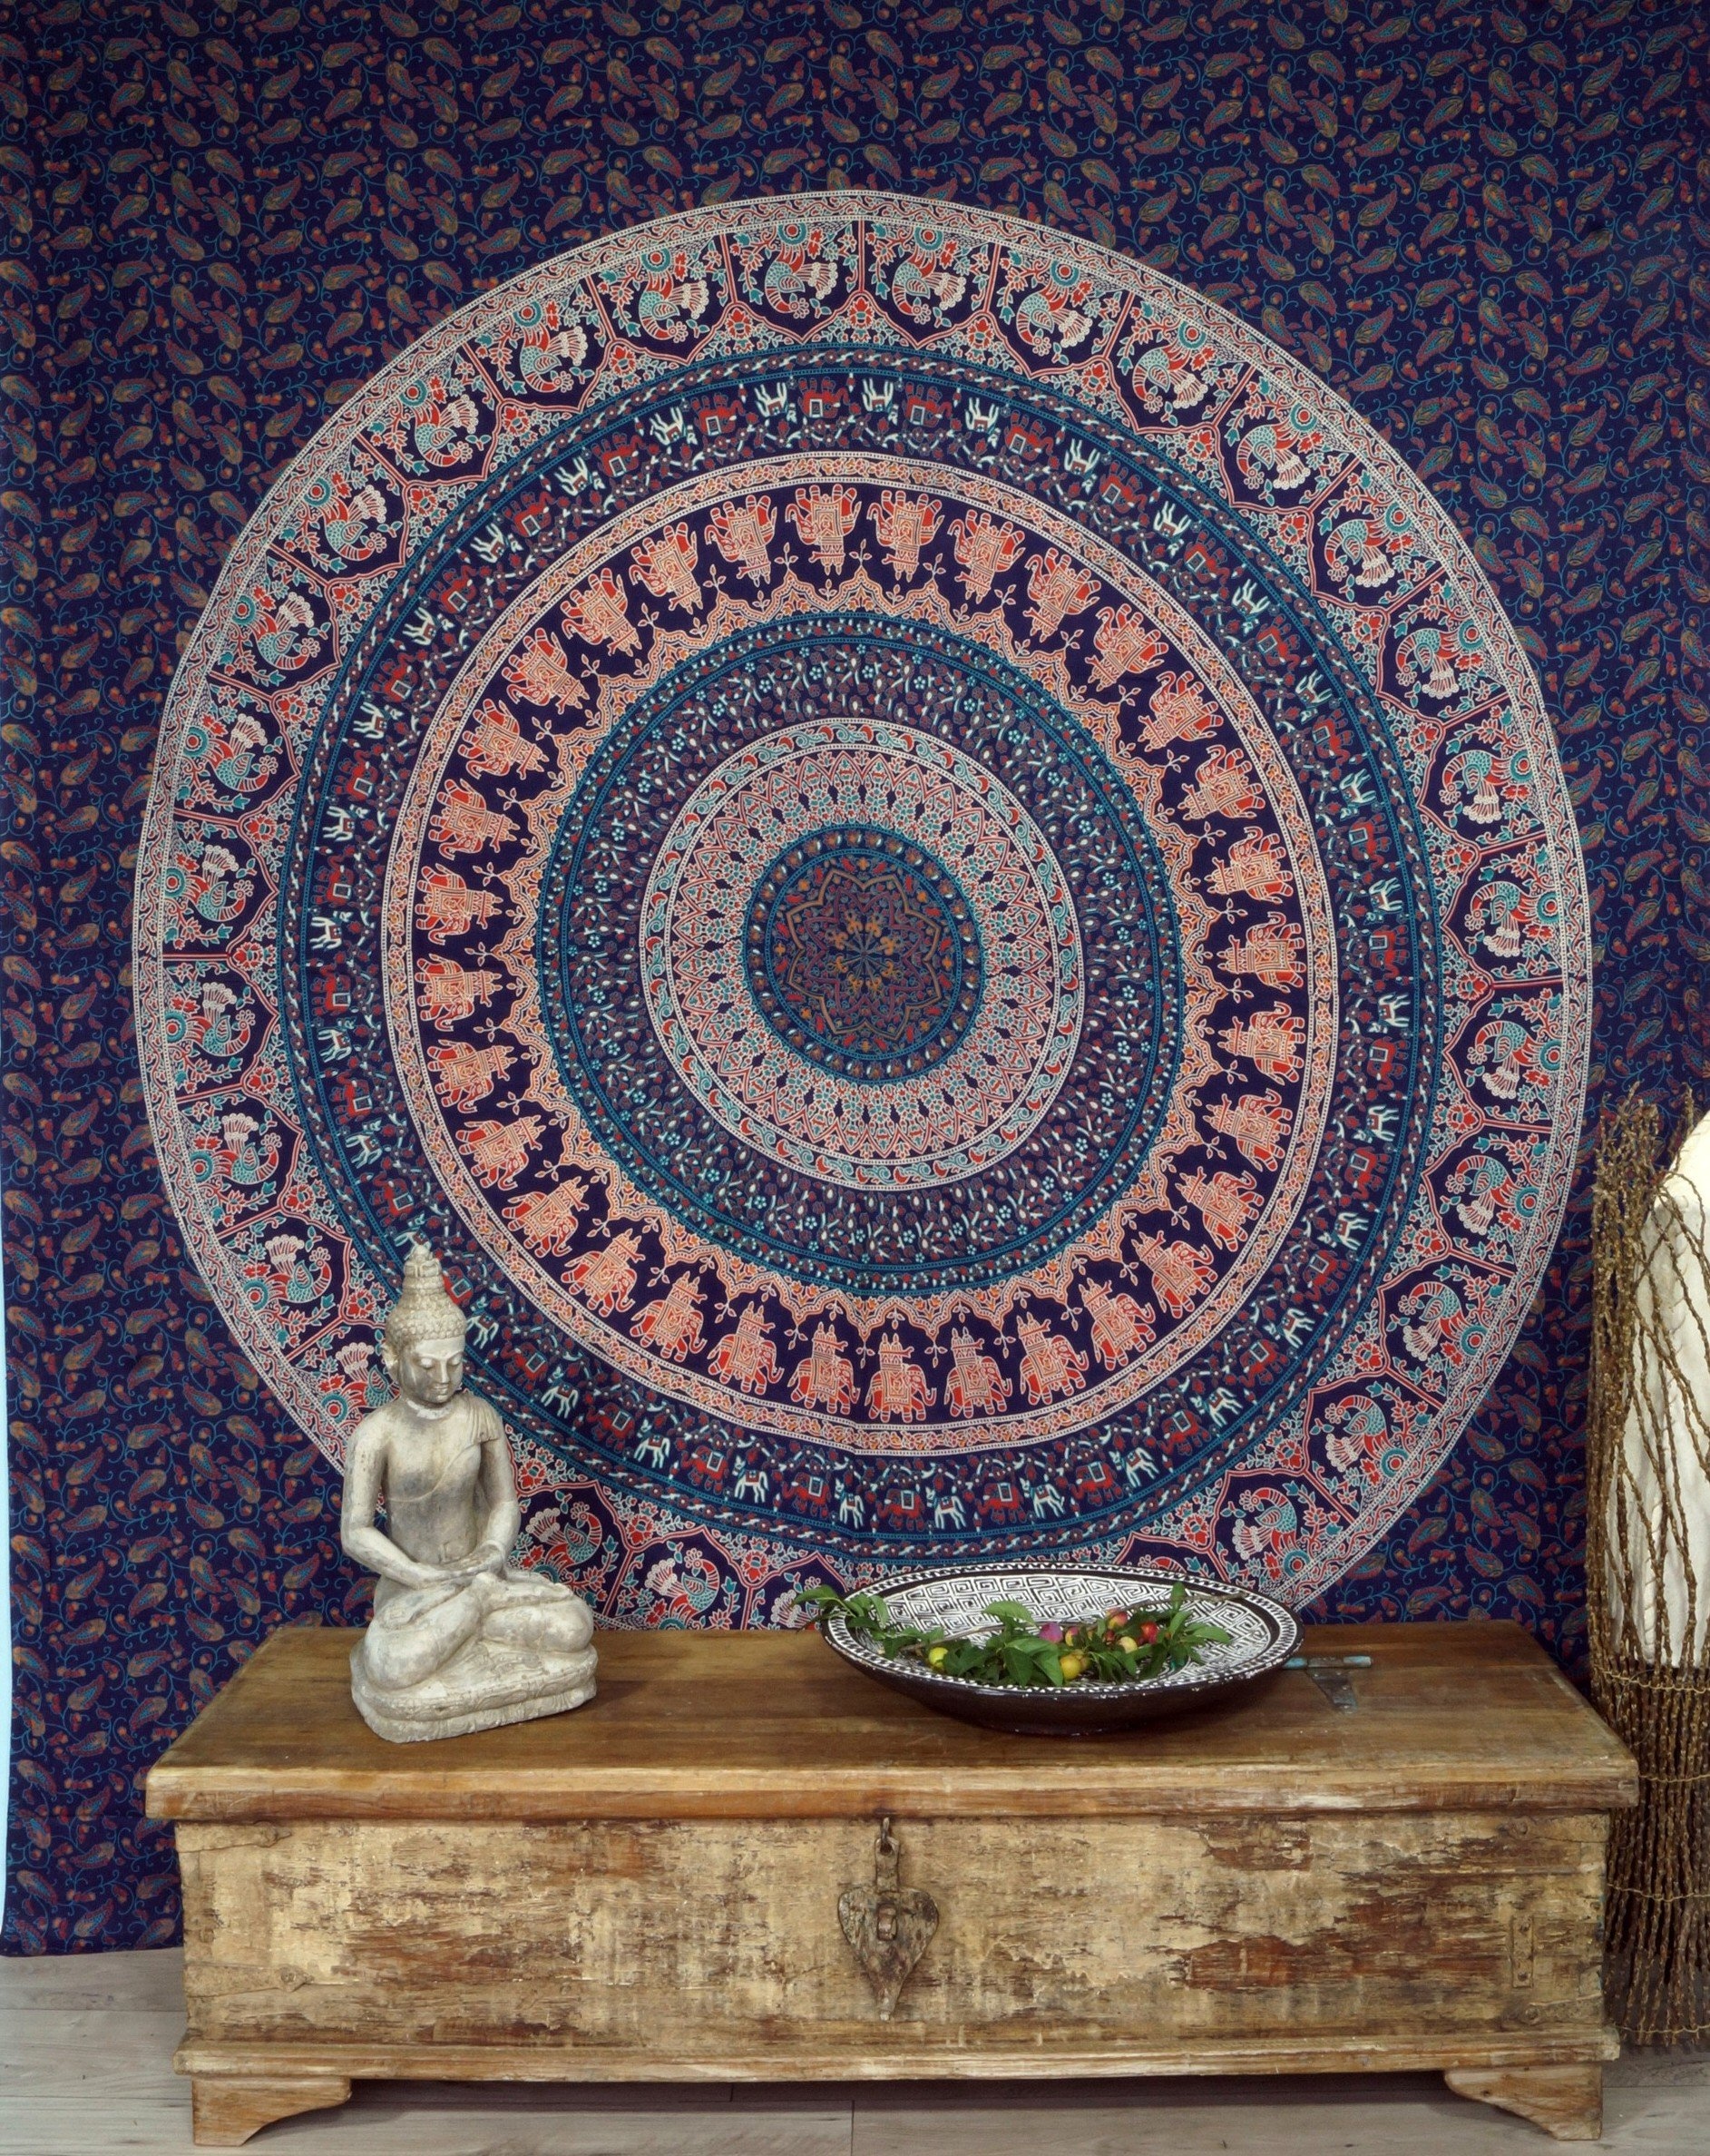 GURU SHOP Boho-Style Wandbehang, Indische Tagesdecke Mandala Druck- Blau/weiß/orange, Baumwolle, 230x210x0,2 cm, Bettüberwurf, Sofa Überwurf